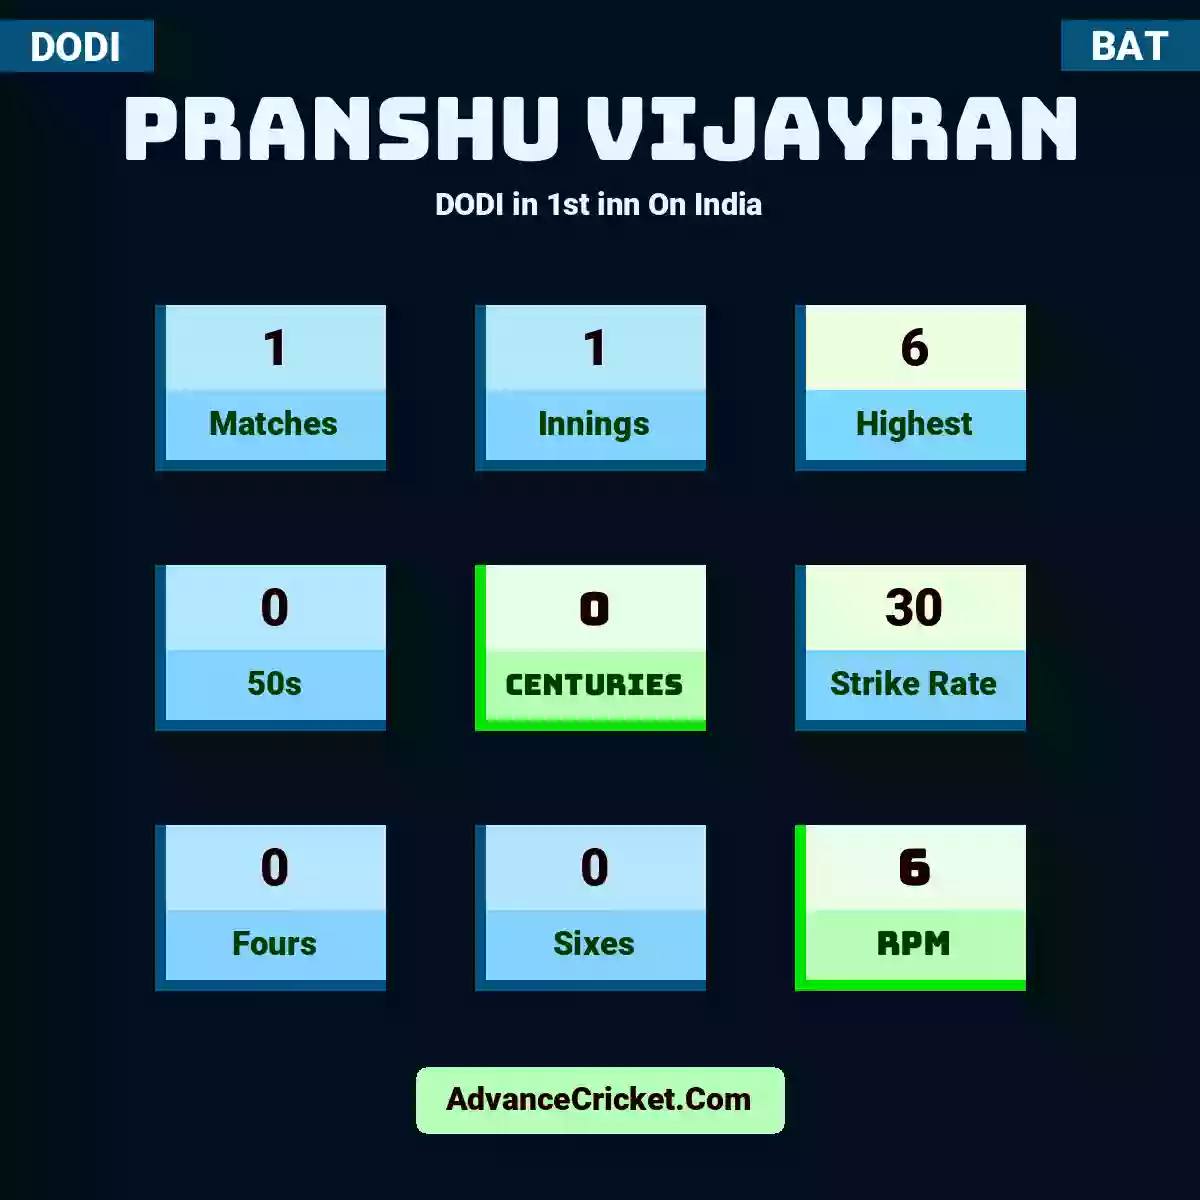 Pranshu Vijayran DODI  in 1st inn On India, Pranshu Vijayran played 1 matches, scored 6 runs as highest, 0 half-centuries, and 0 centuries, with a strike rate of 30. P.Vijayran hit 0 fours and 0 sixes, with an RPM of 6.